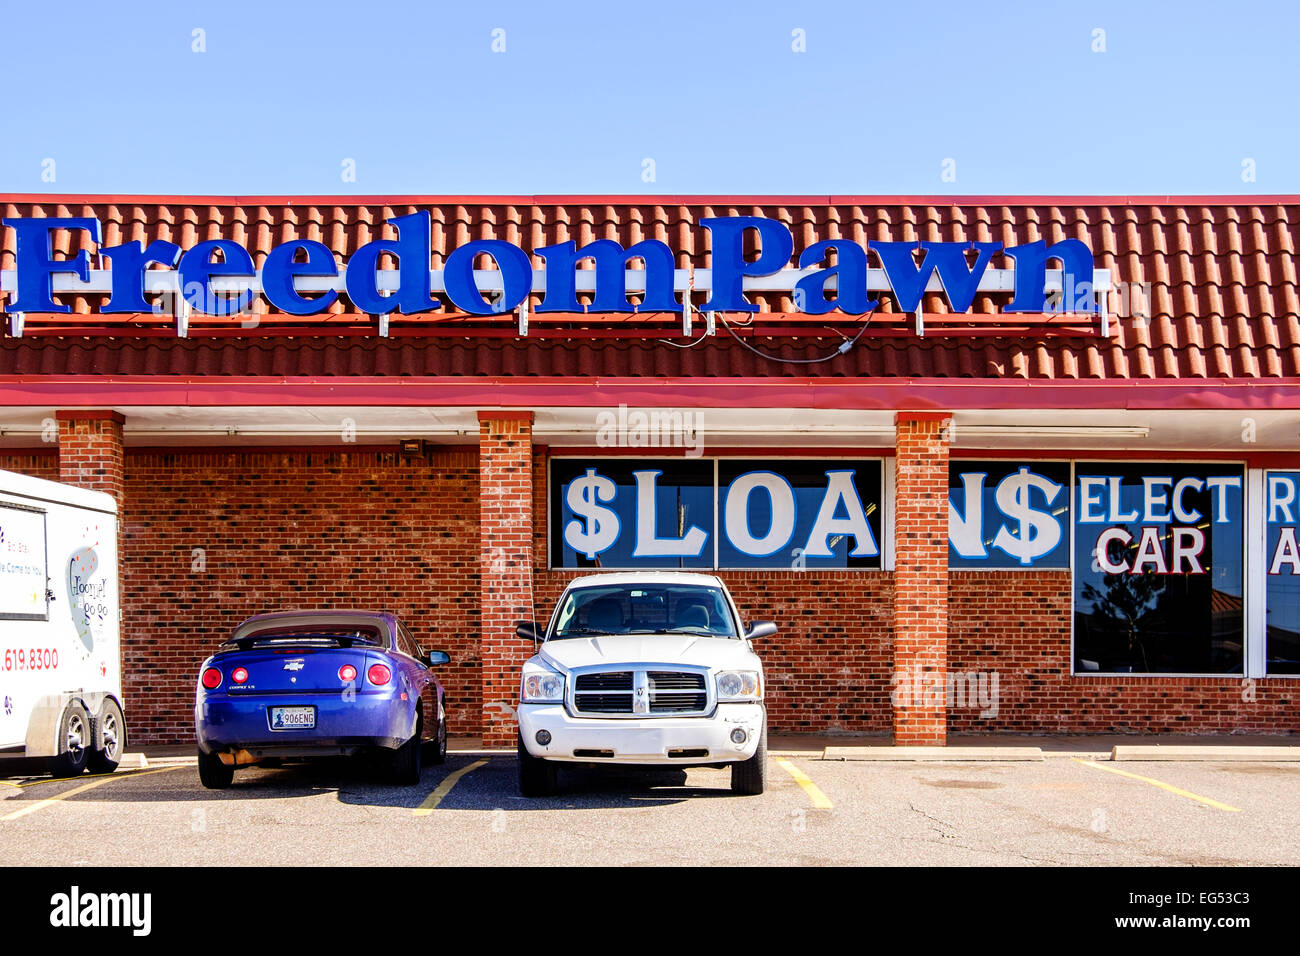 The exterior of Freedom Pawn, a pawn shop in Oklahoma City, Oklahoma, USA. Stock Photo